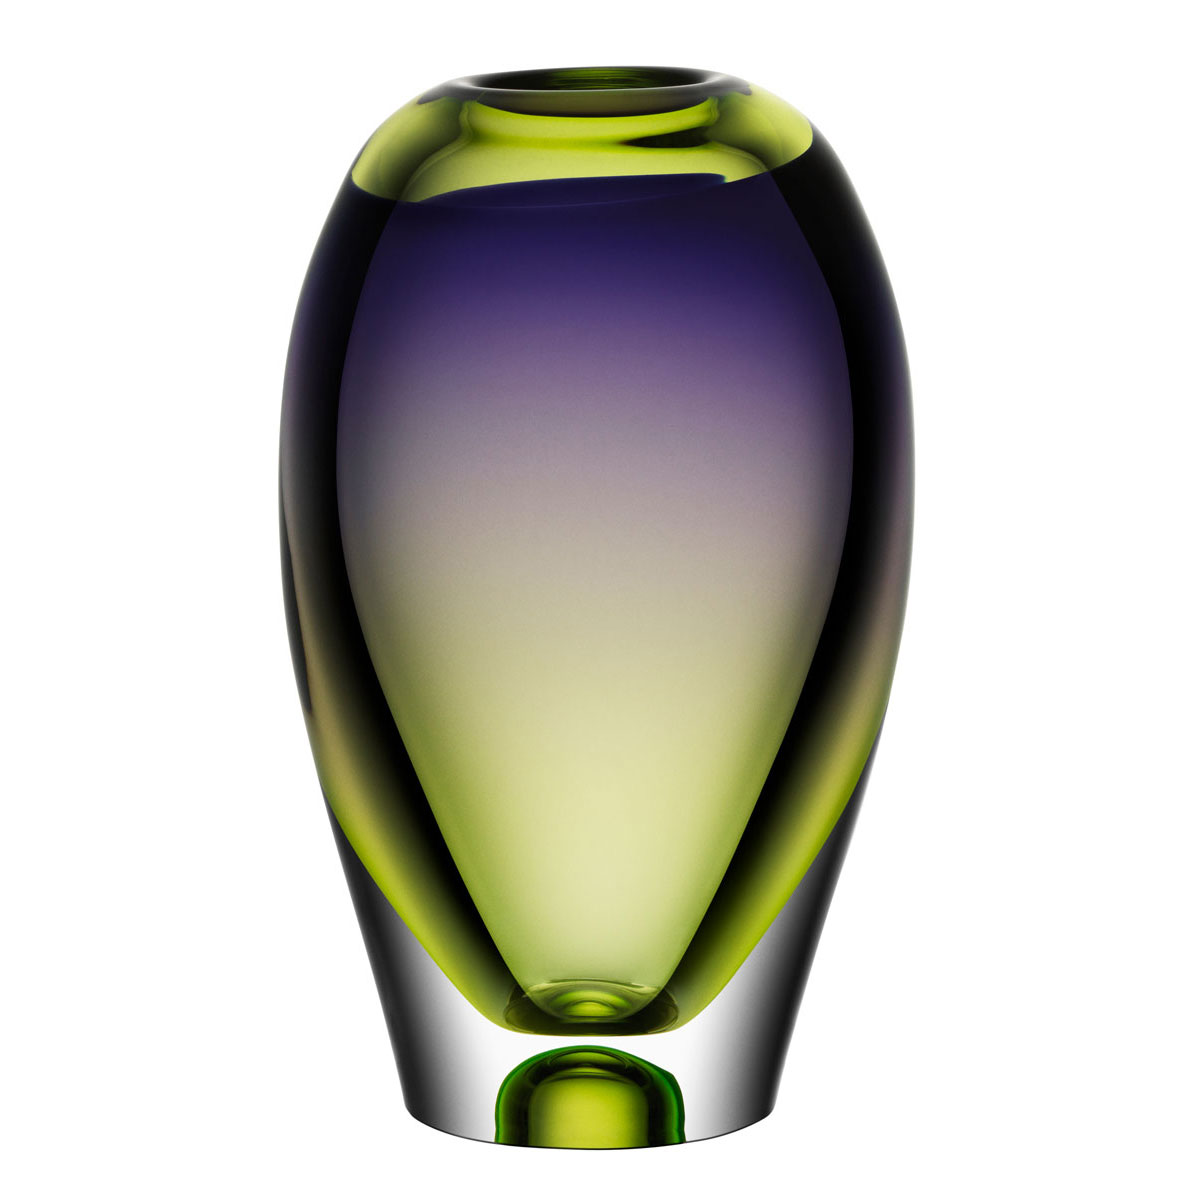 Kosta Boda Vision Purple and Green 10 1/4" Vase